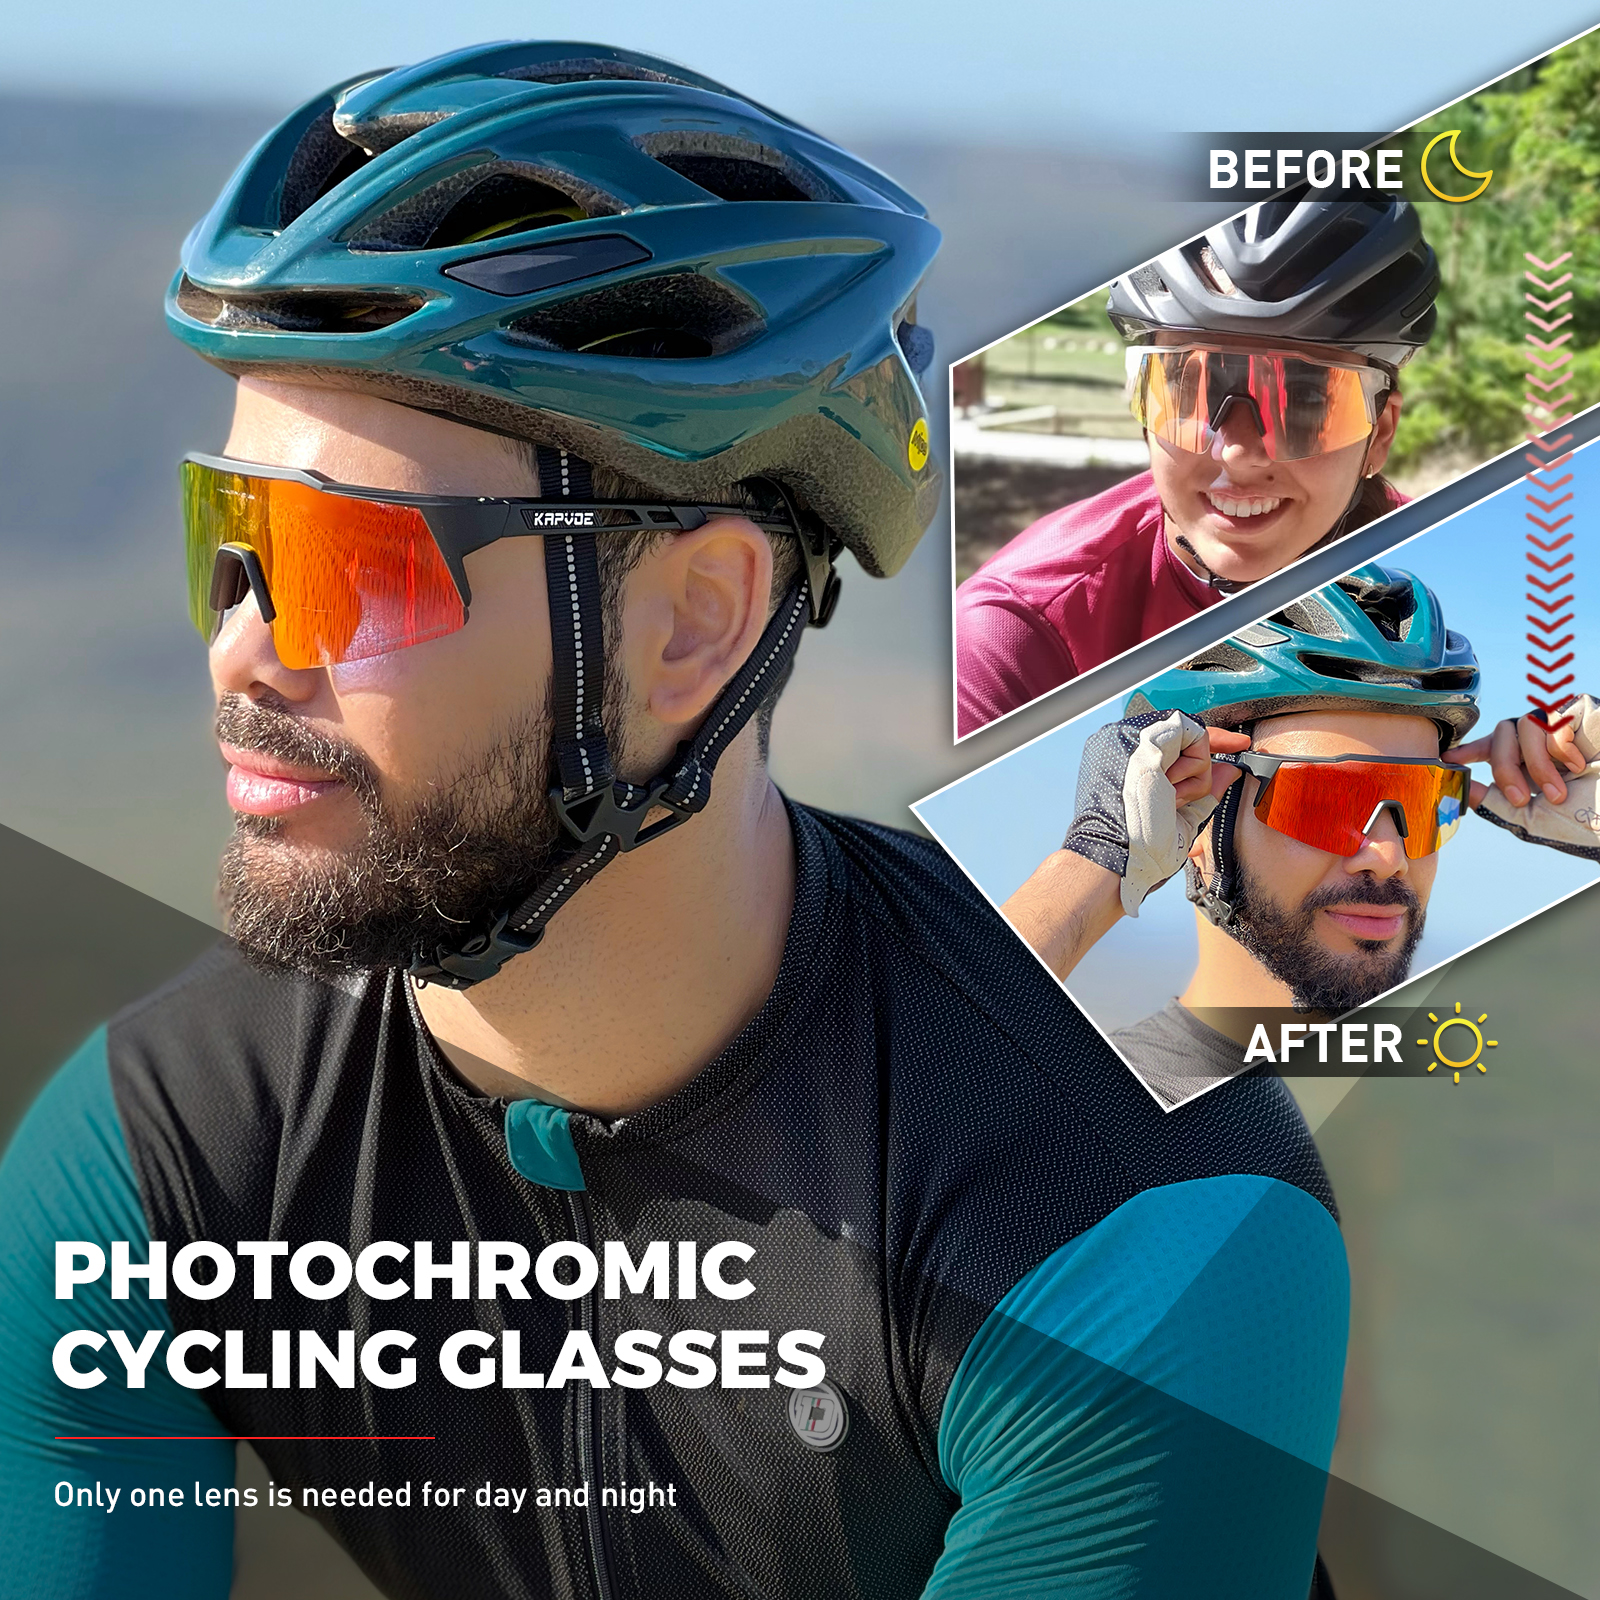 Kapvoe Cycling Sunglasses Mtb Sports Cycling Glasses Riding Goggles  Mountain Bike Glasses Men Women Driving Eyewear 1Lens